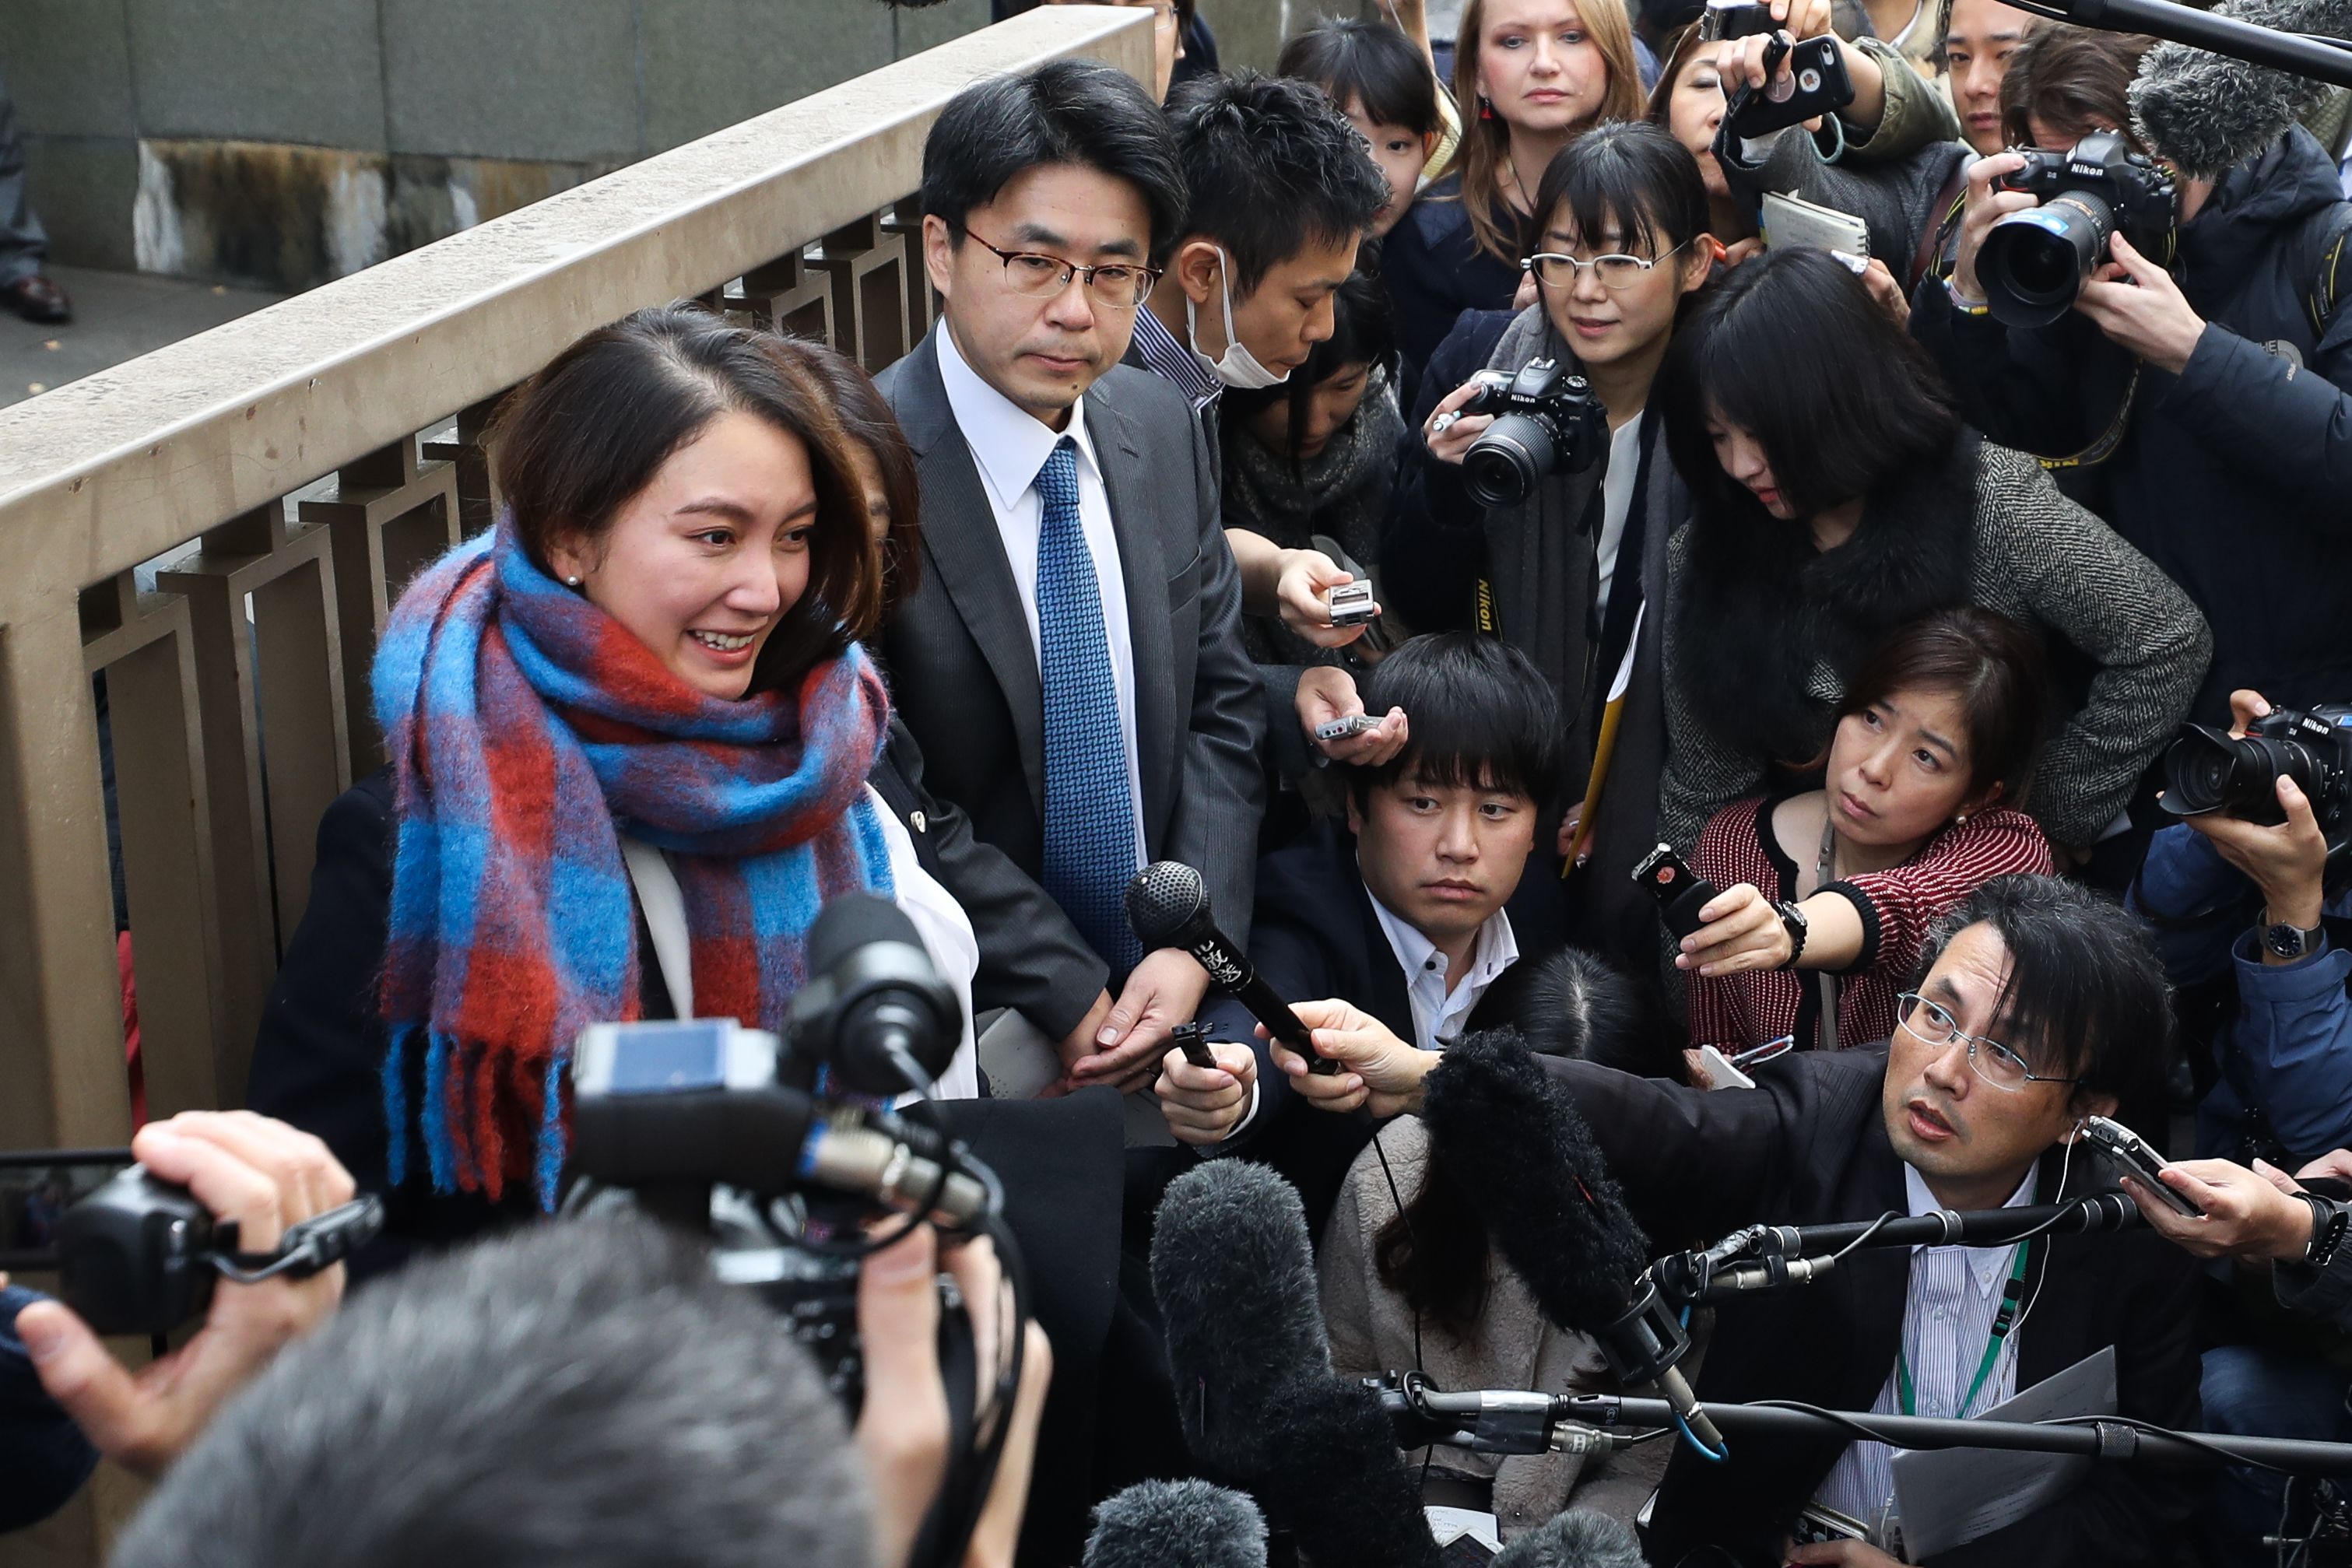 Kitnap Rap Sex - Shiori Ito won civil case against her alleged rapist. But Japan's rape laws  need overhaul, campaigners say | CNN